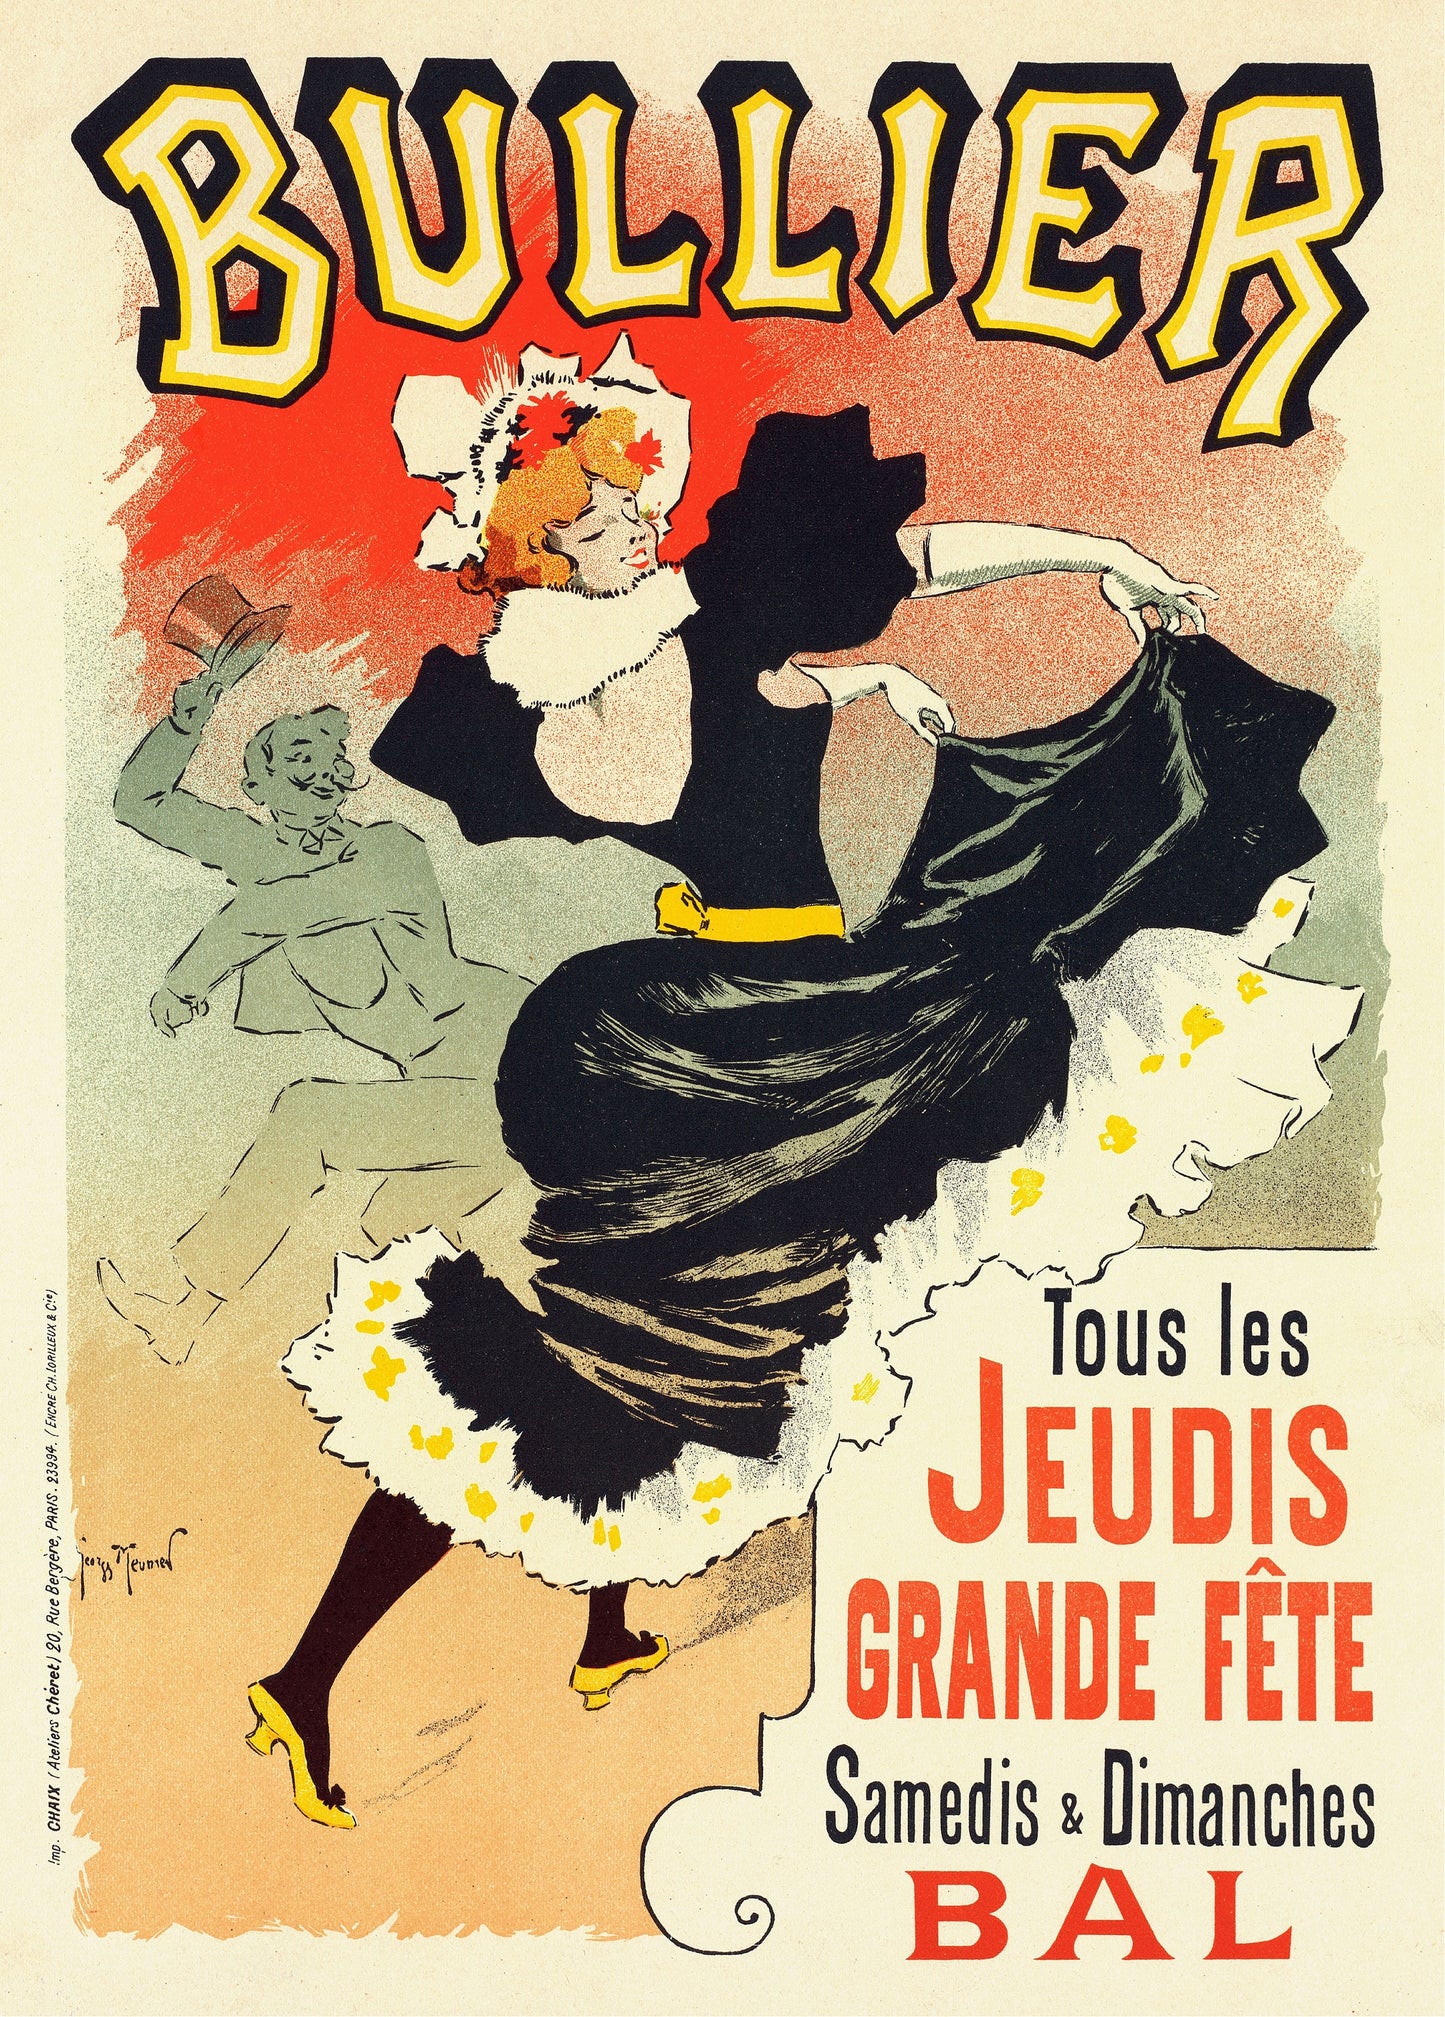 Henri Georges Meunier Poster Advertisements [20 Images]